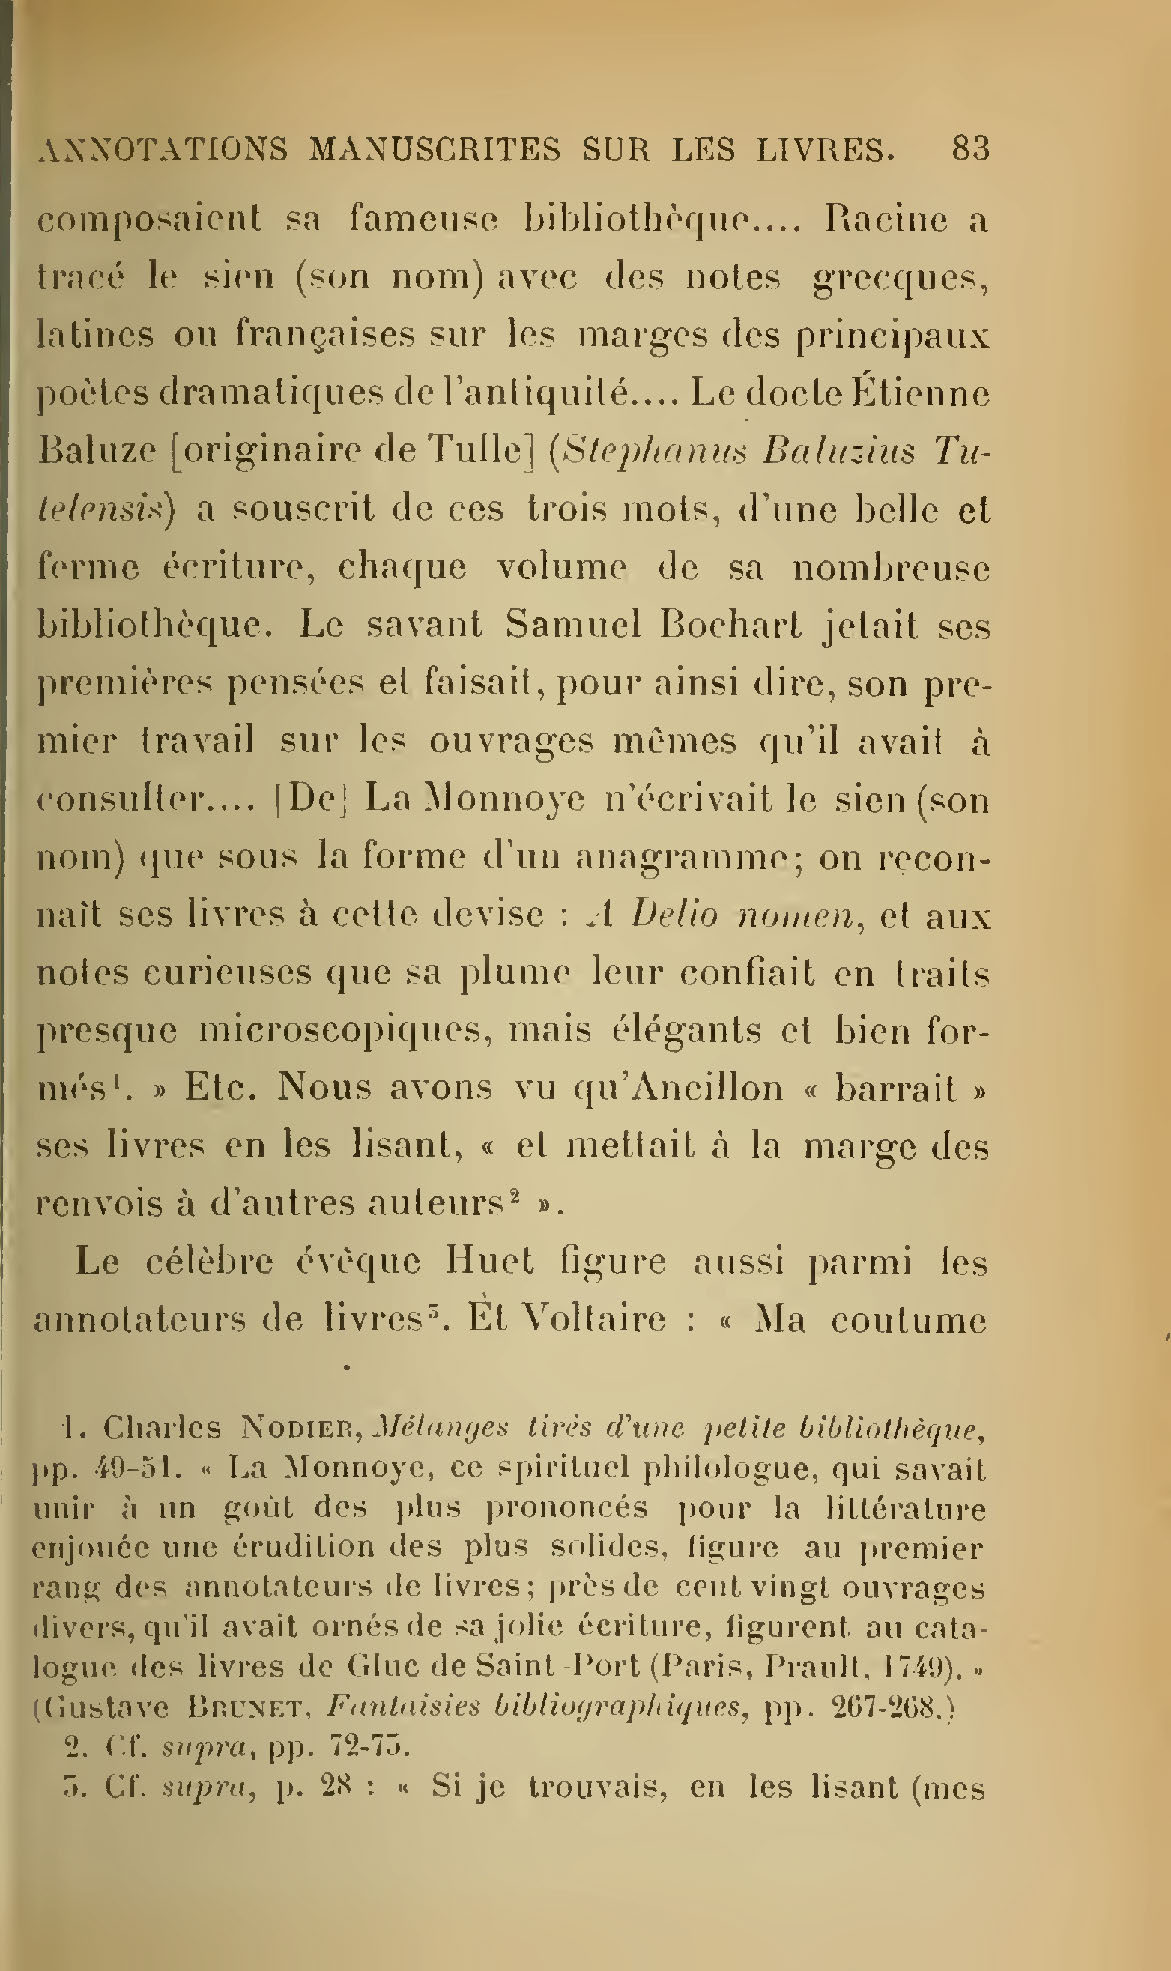 Albert Cim, Le Livre, t. II, p. 083.